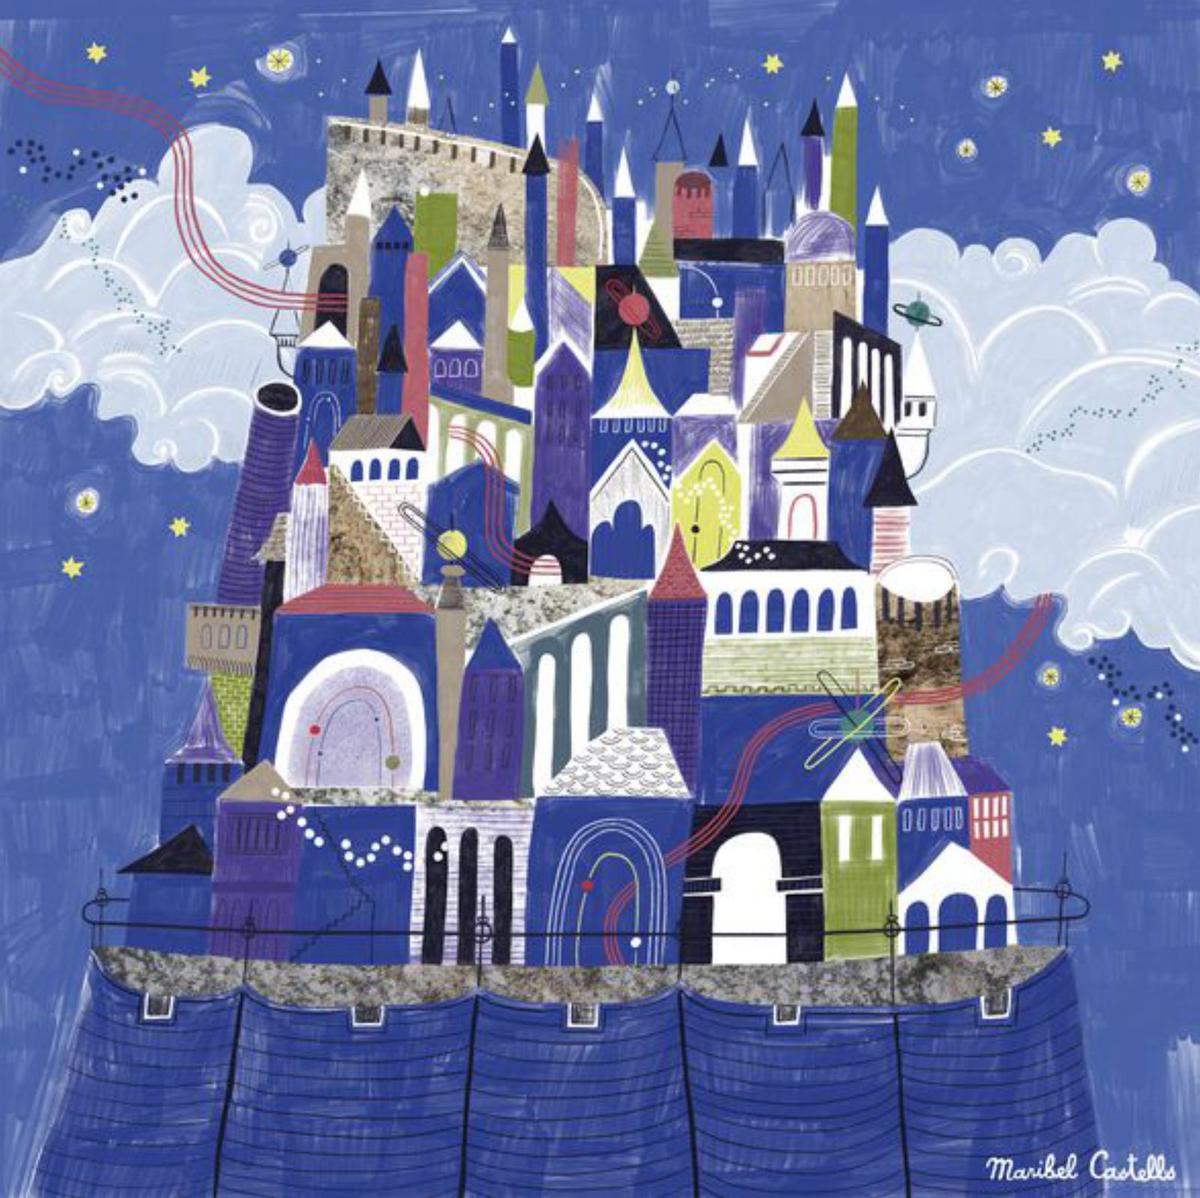 El cartel de Maribel Castells para la Fiet triunfa en IlustroFest | ILUSTRACIONES DE MARIBEL CASTELLS